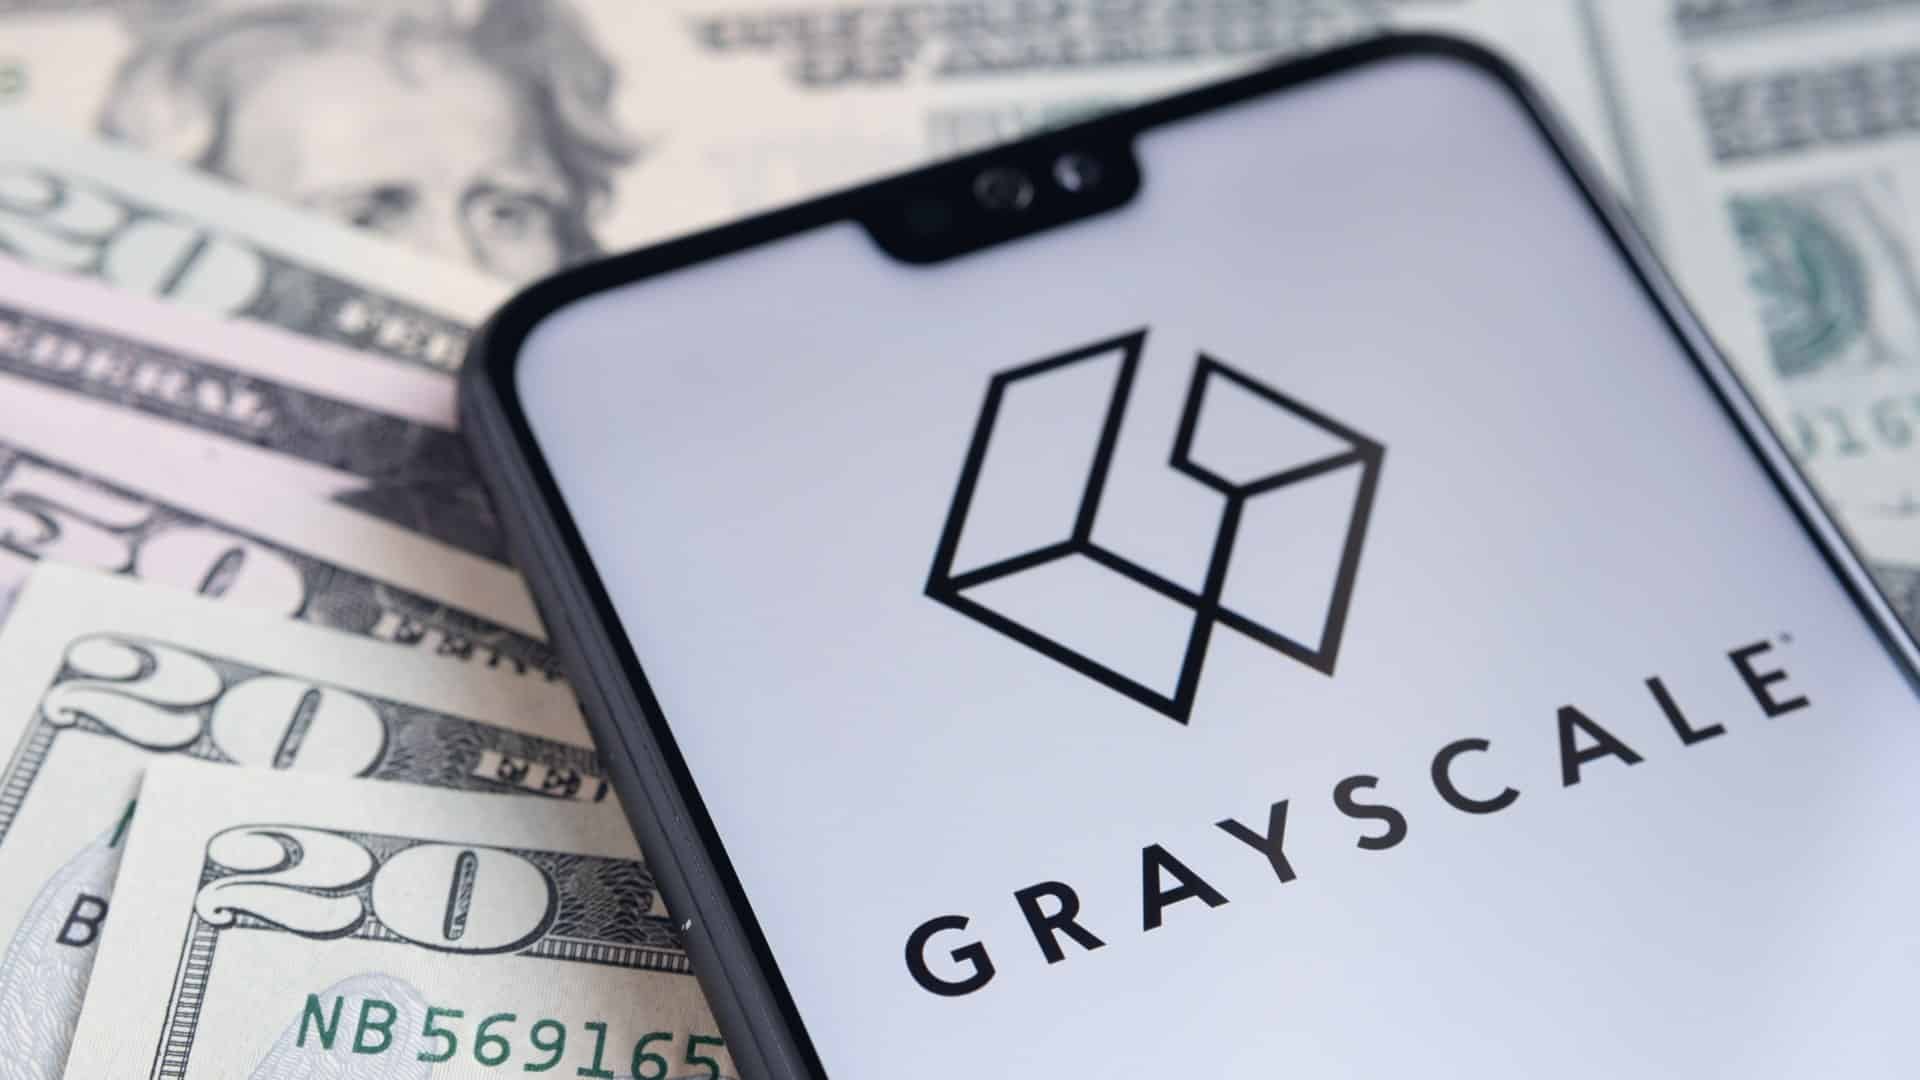 Grayscale portfolio was unveiled